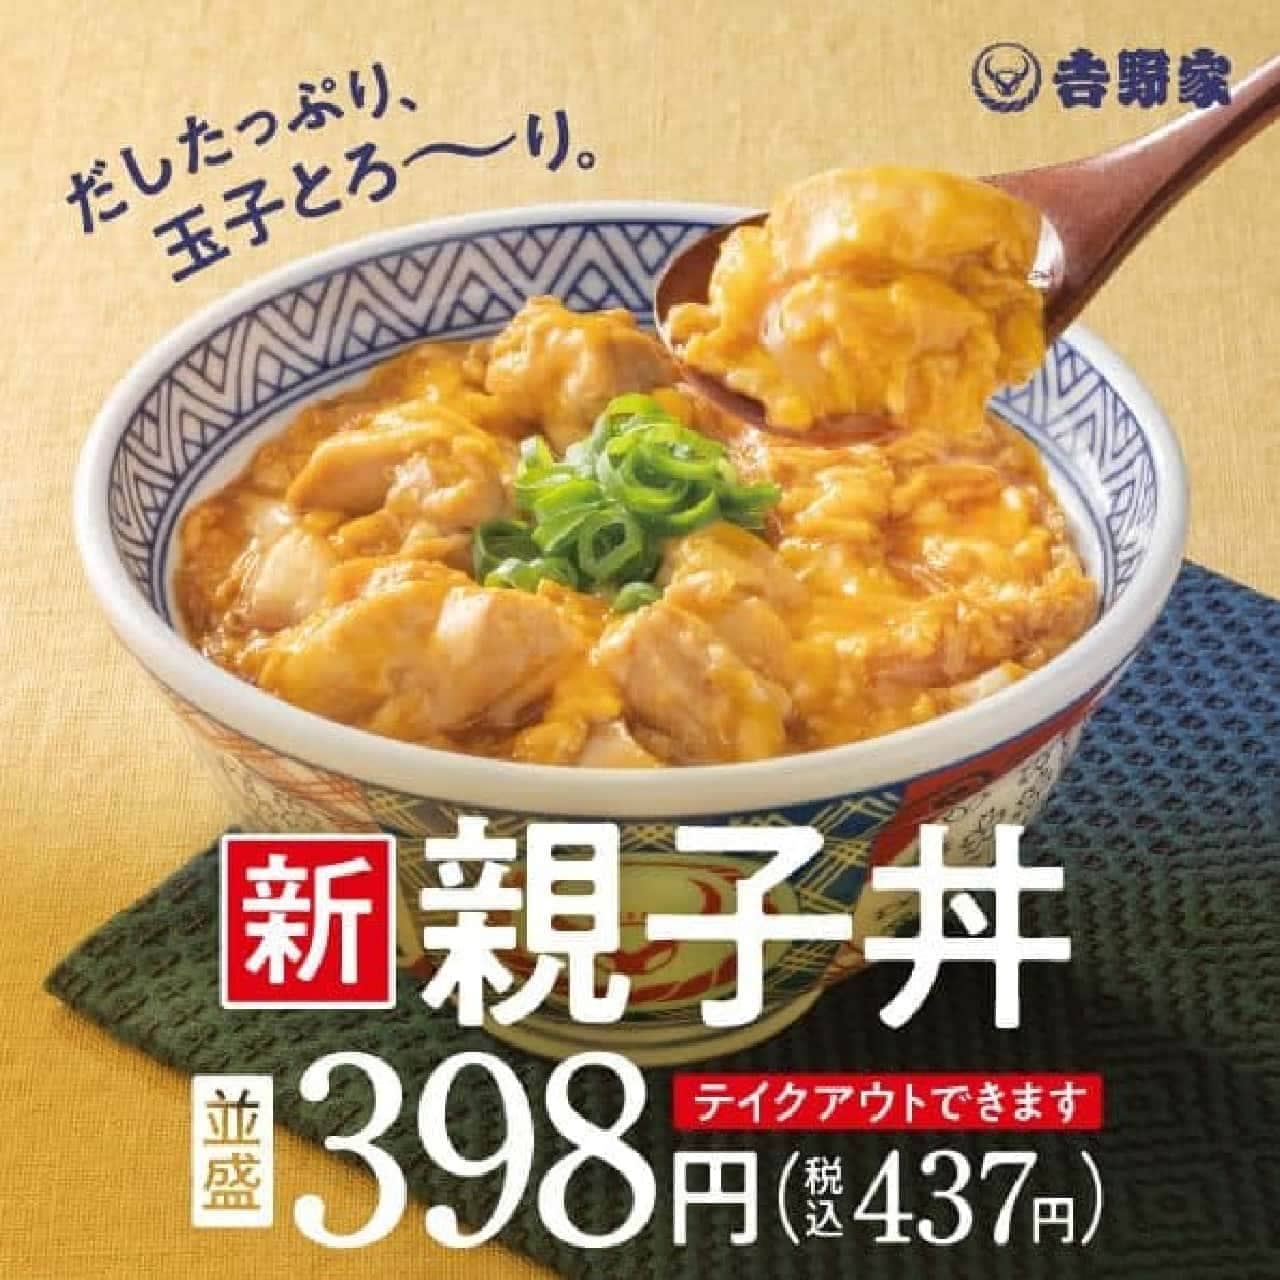 Yoshinoya "oyakodon" (chicken and egg bowl)